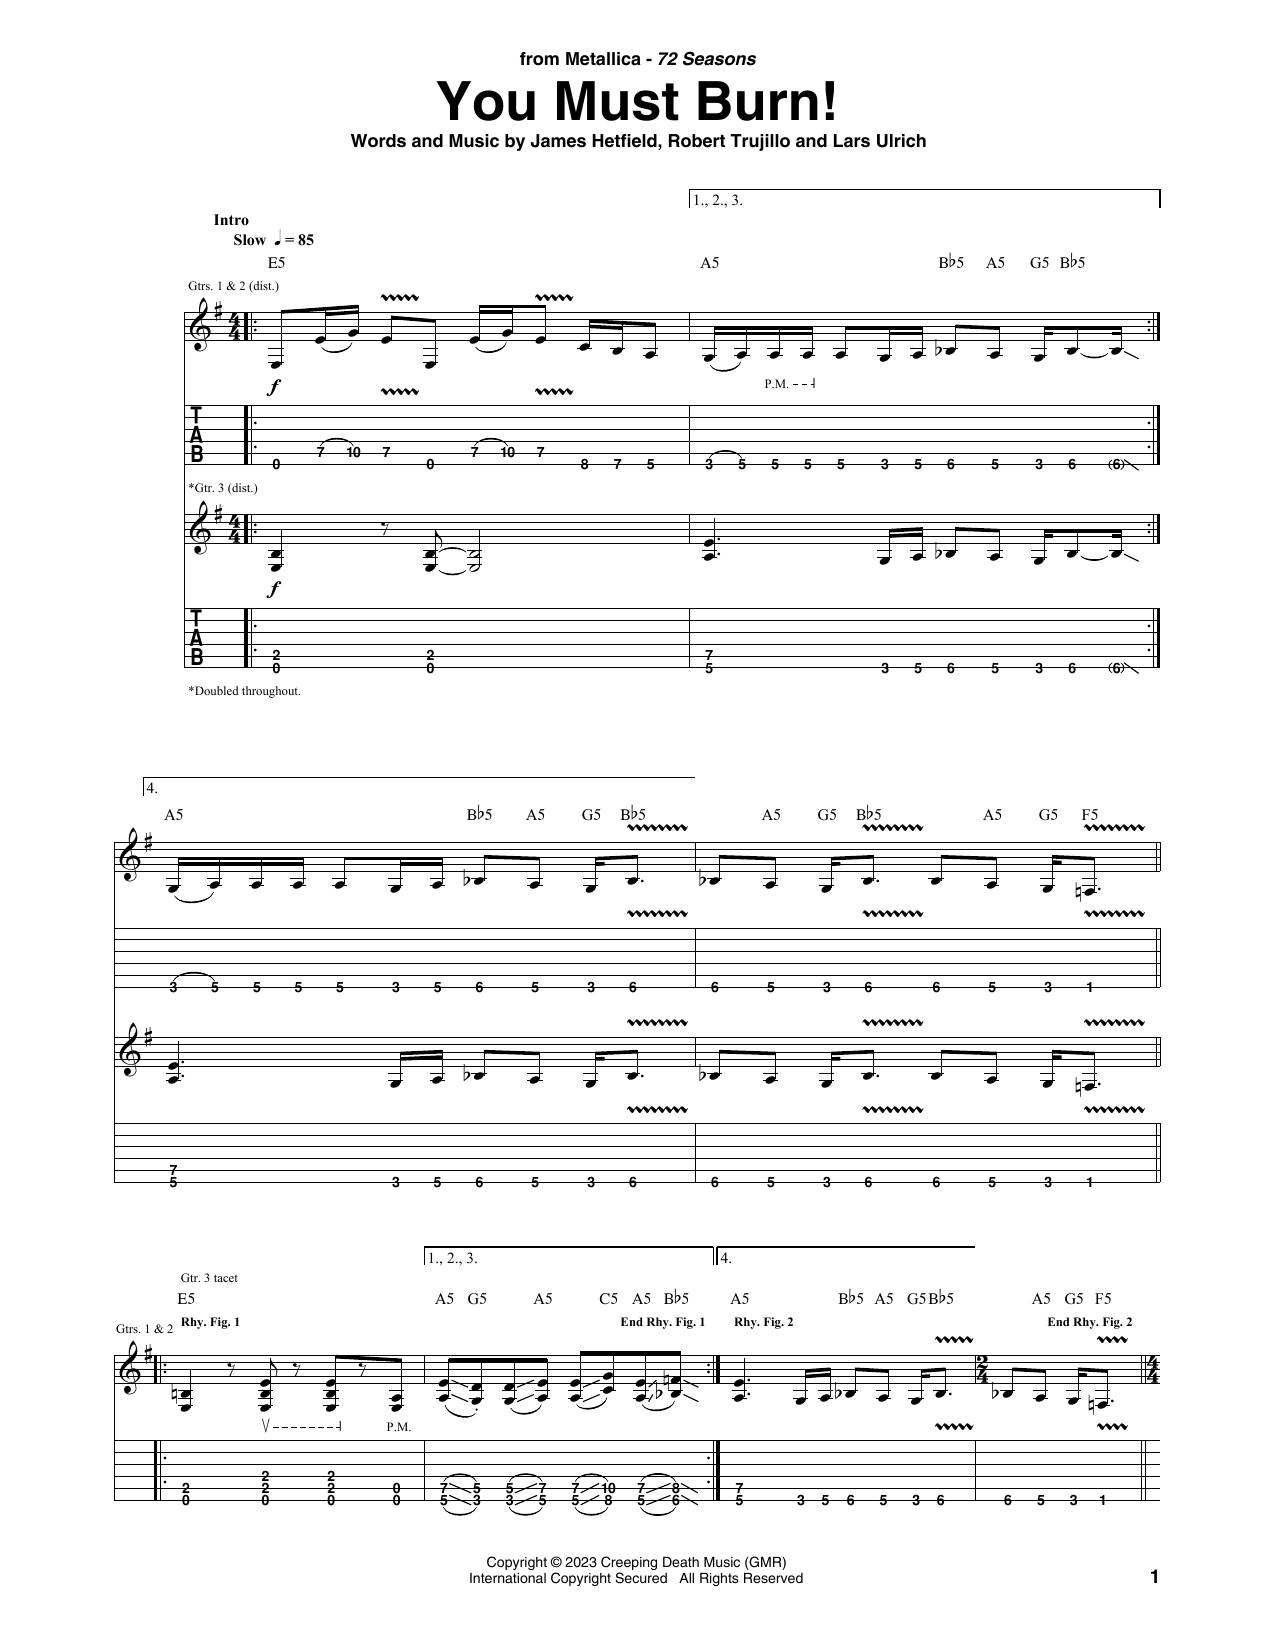 Metallica You Must Burn! Sheet Music Notes & Chords for Guitar Tab - Download or Print PDF